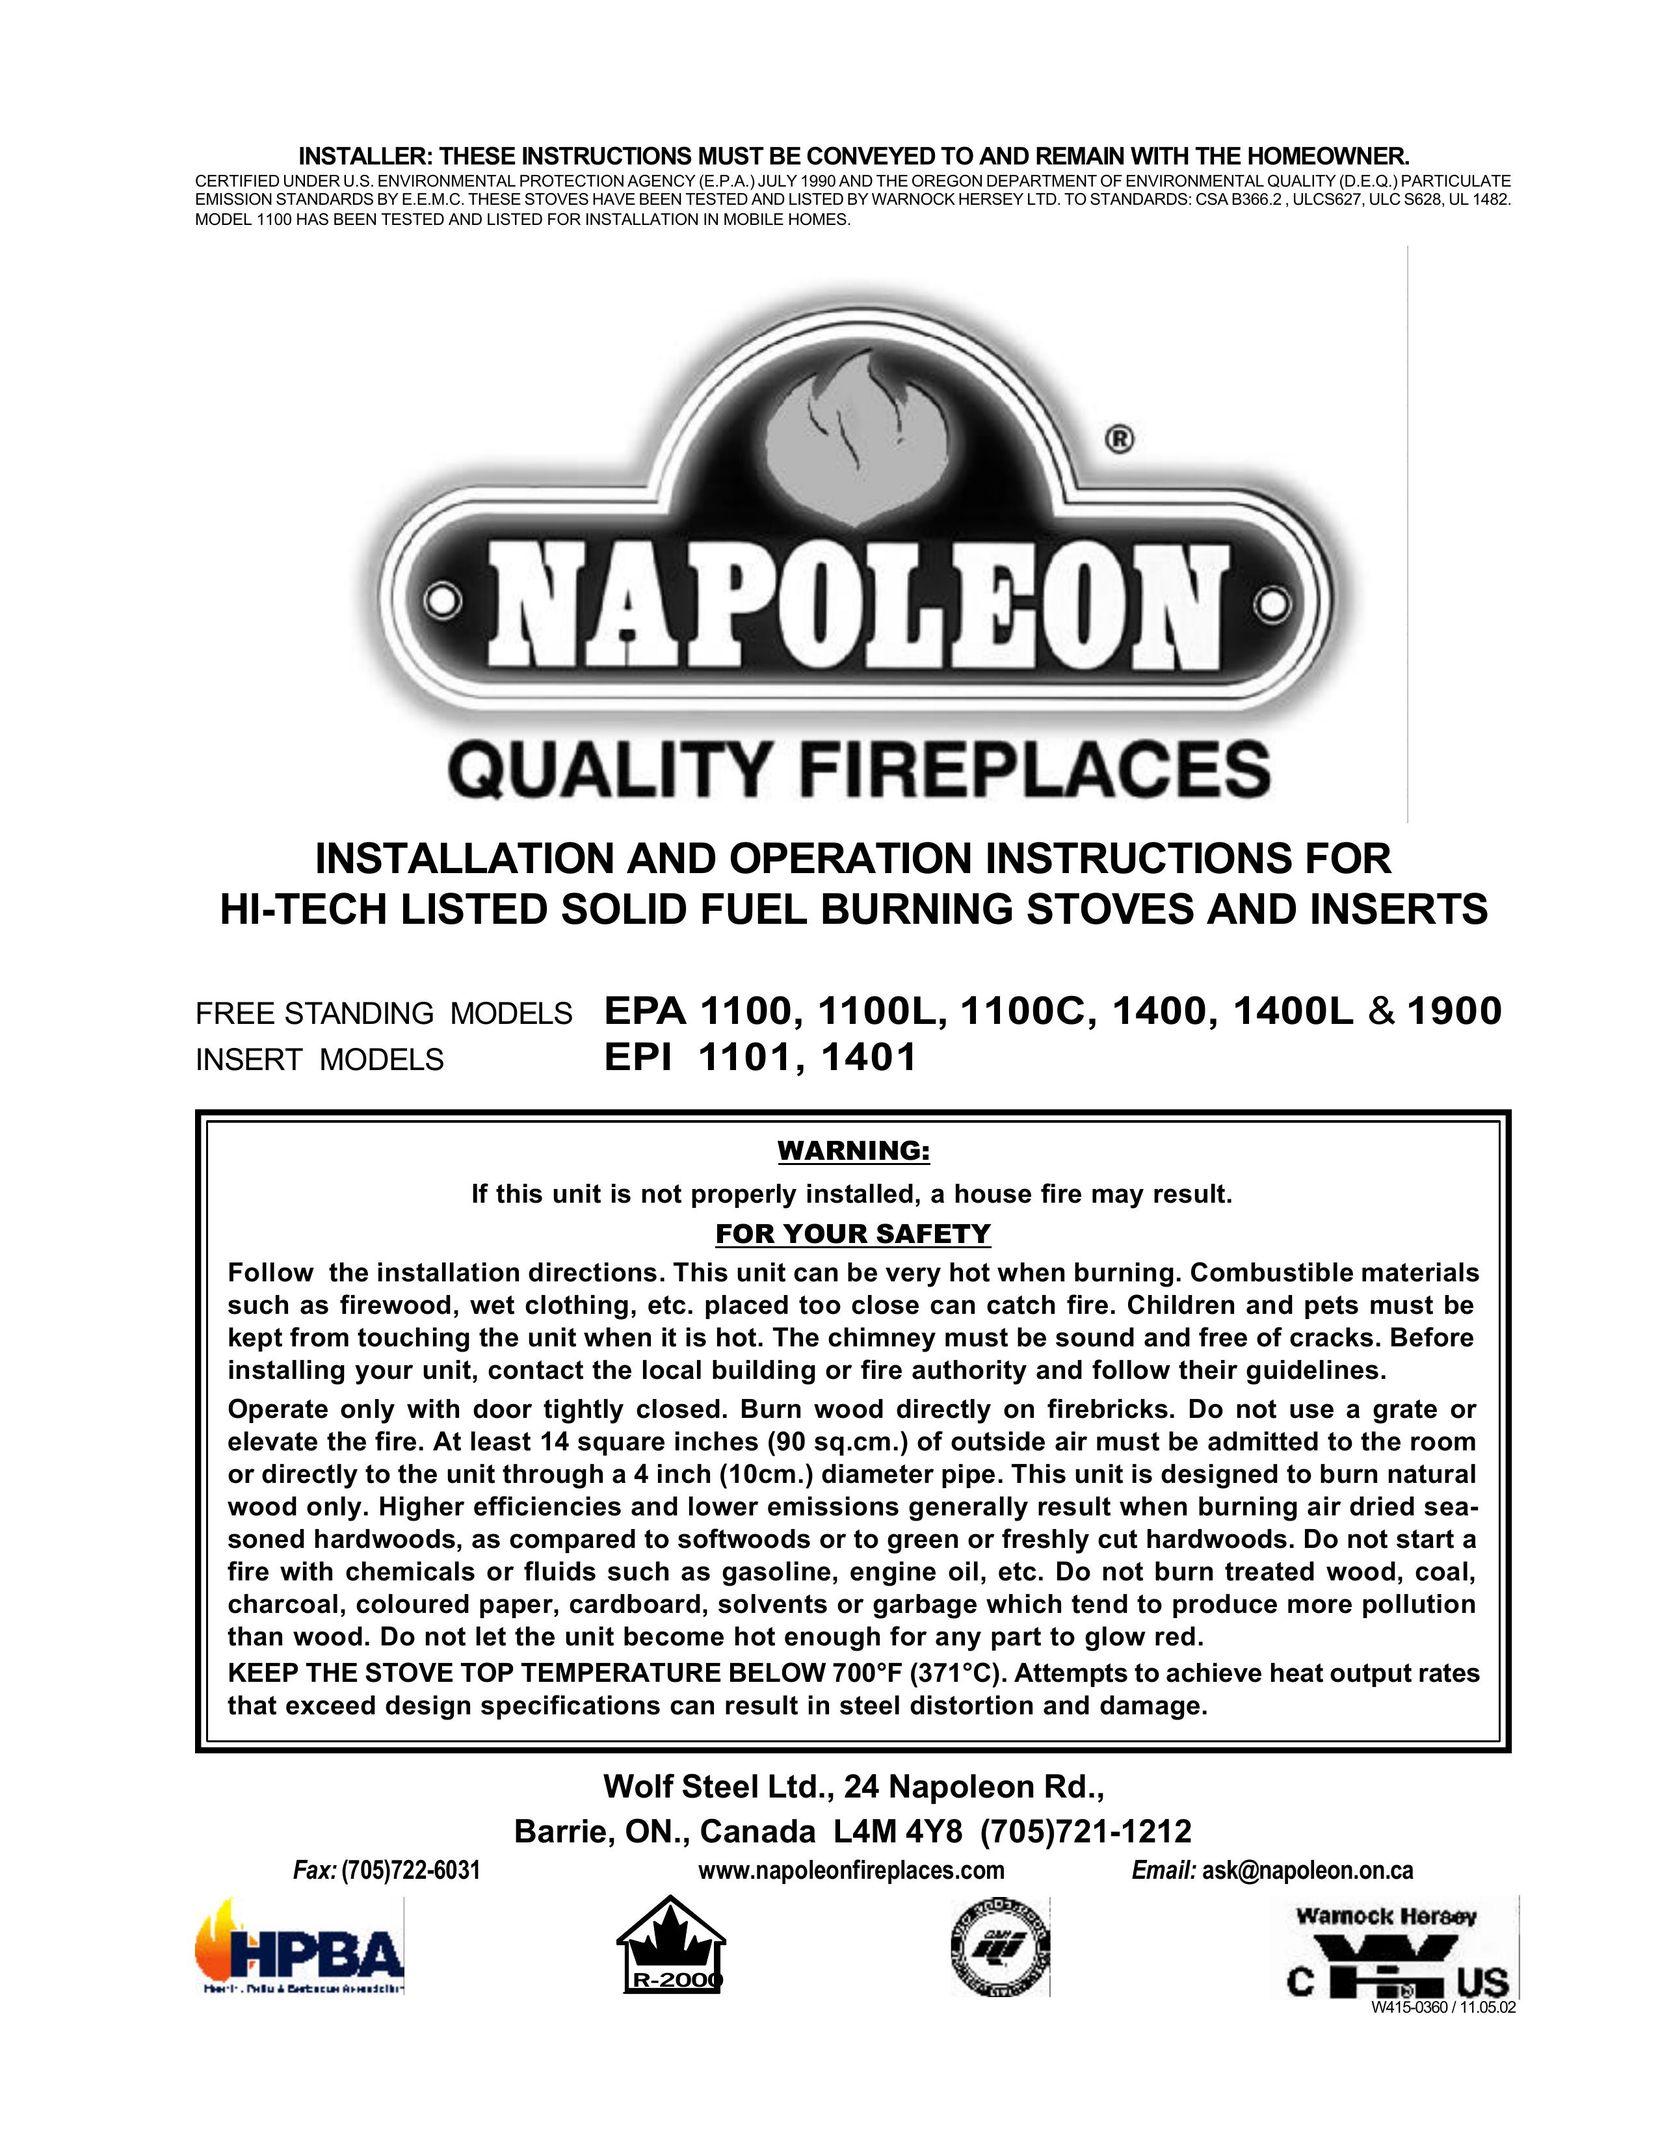 Napoleon Fireplaces EPA 1400 Stove User Manual